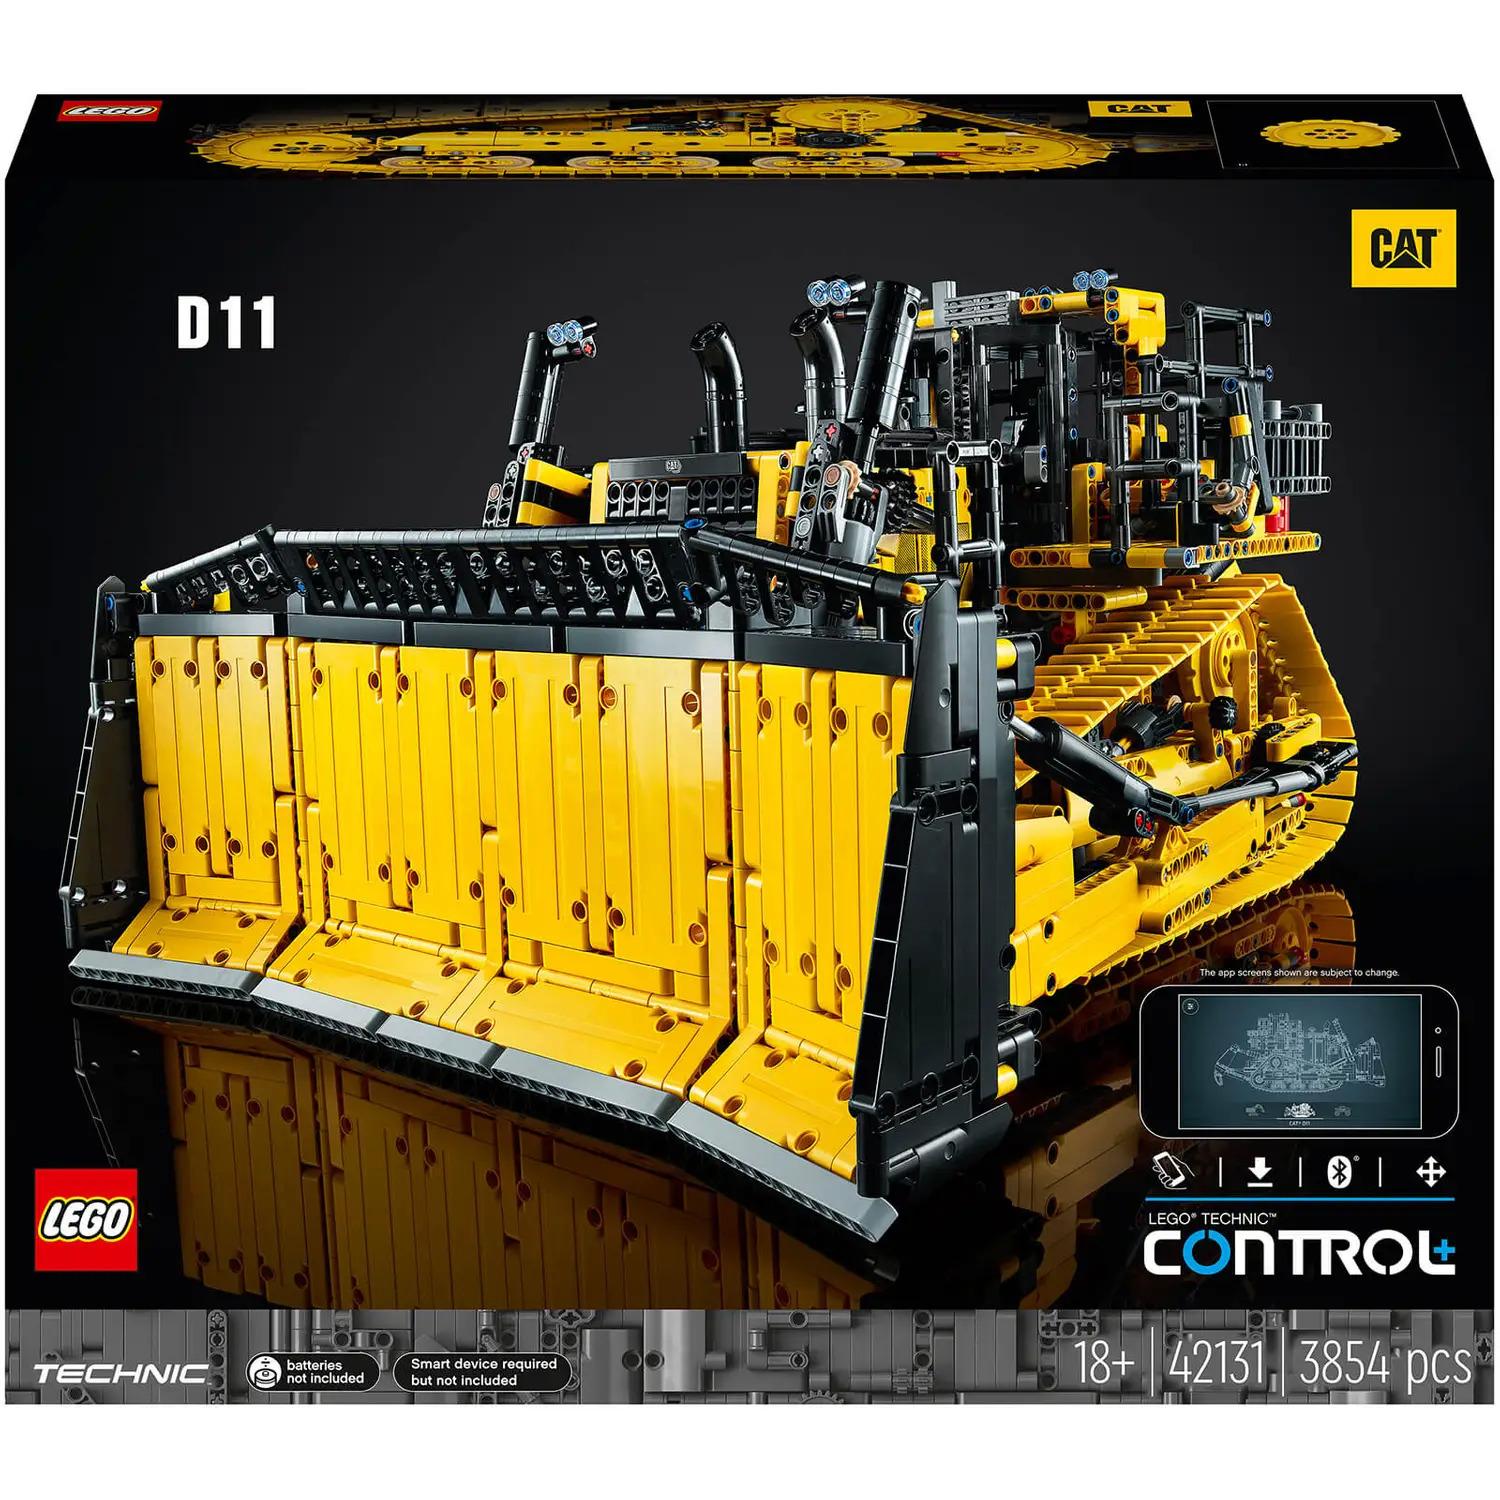 3854-Piece Lego Technic Cat D11T Bulldozer for $409.99 Shipped